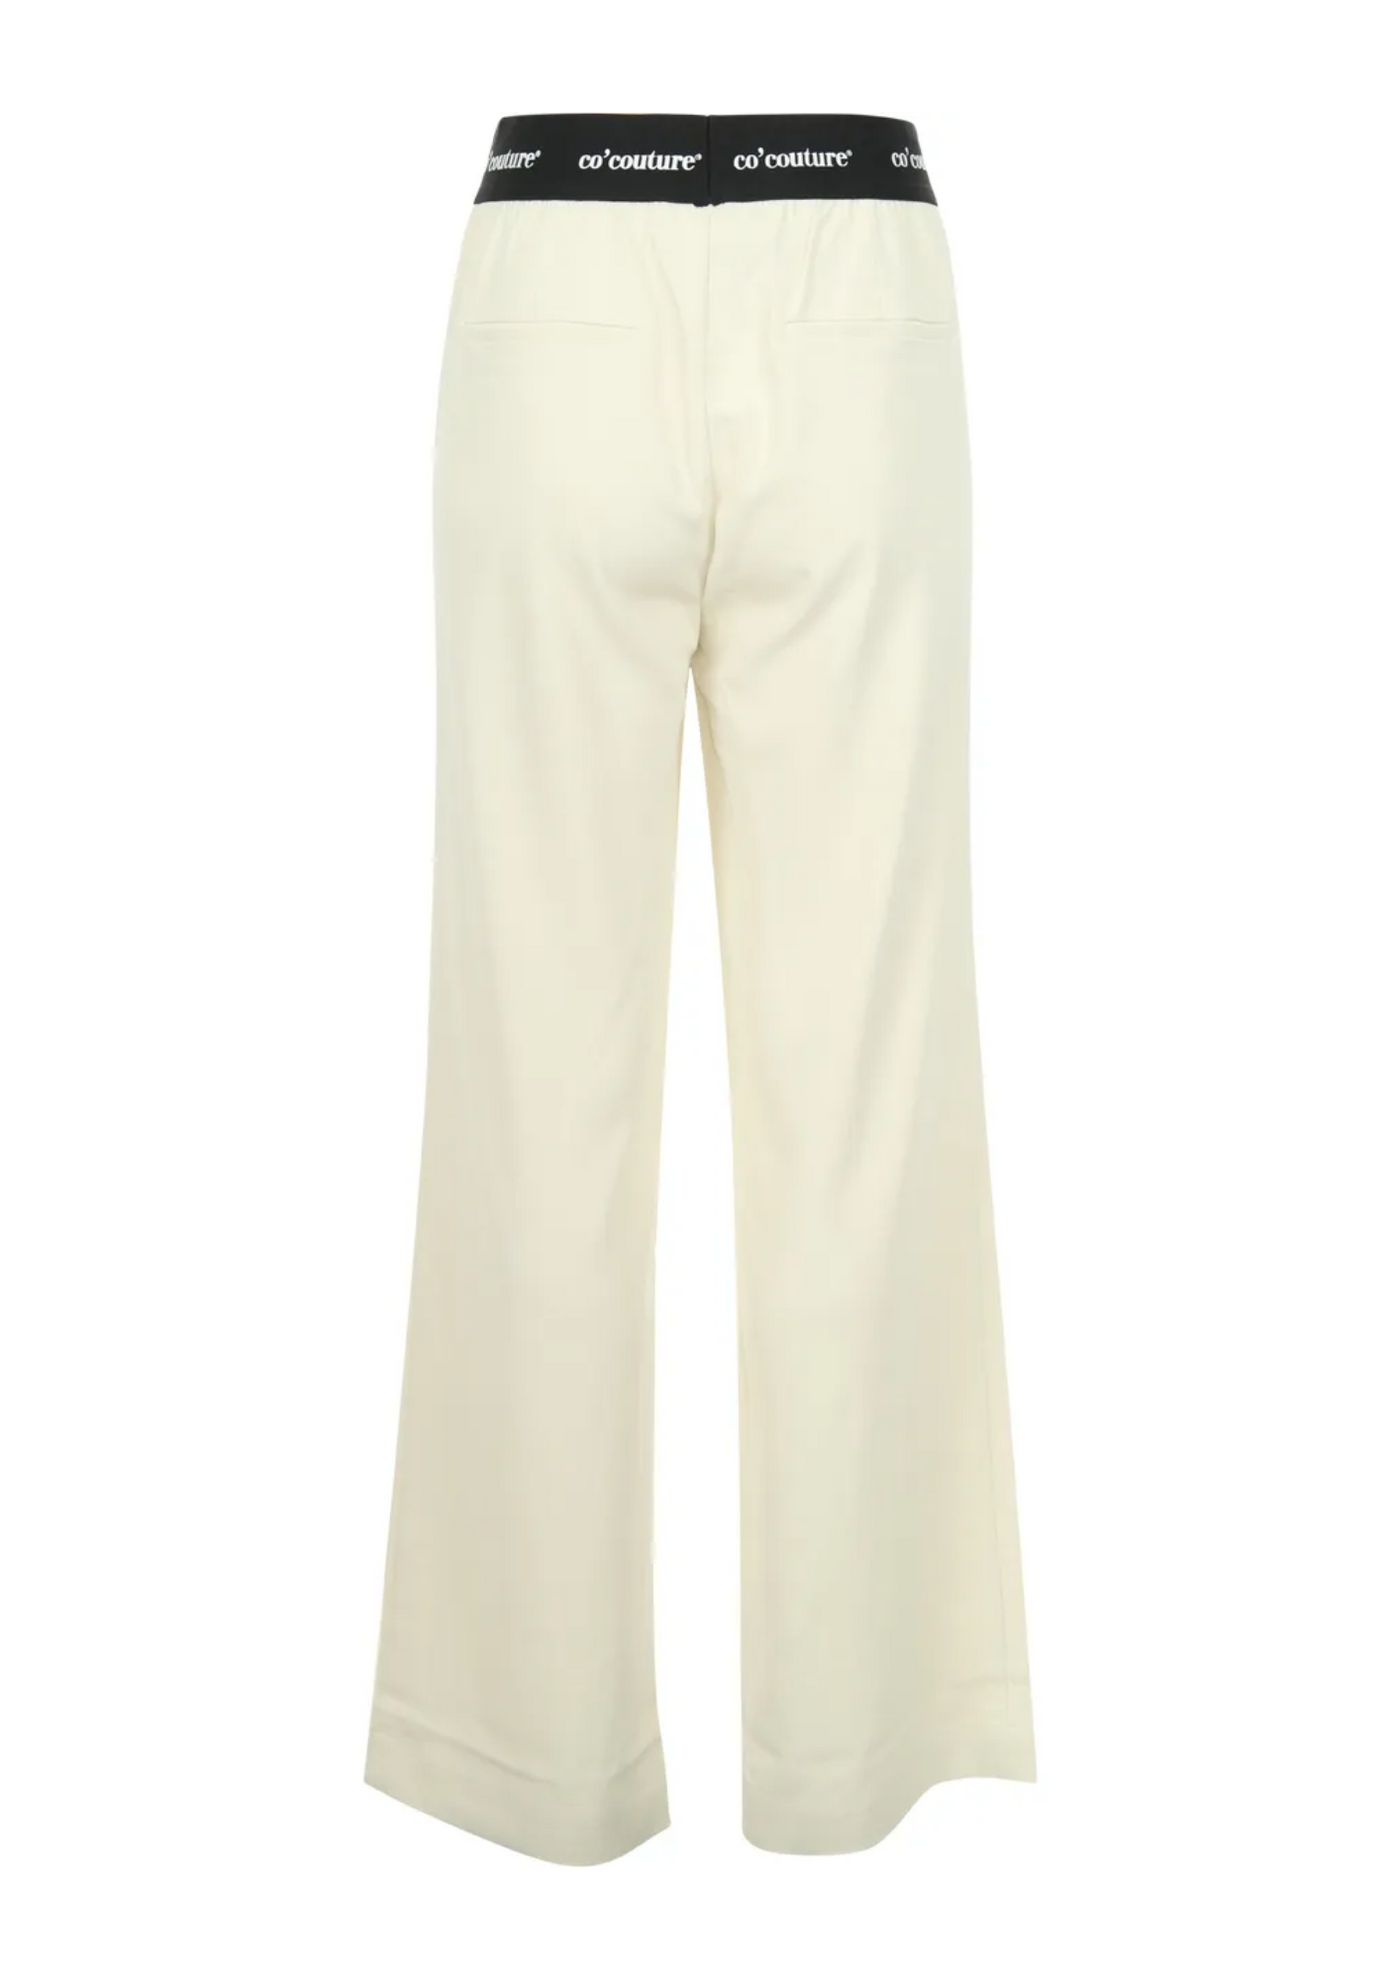 Co' Couture | AminaCC Logo Long Pants Off-White